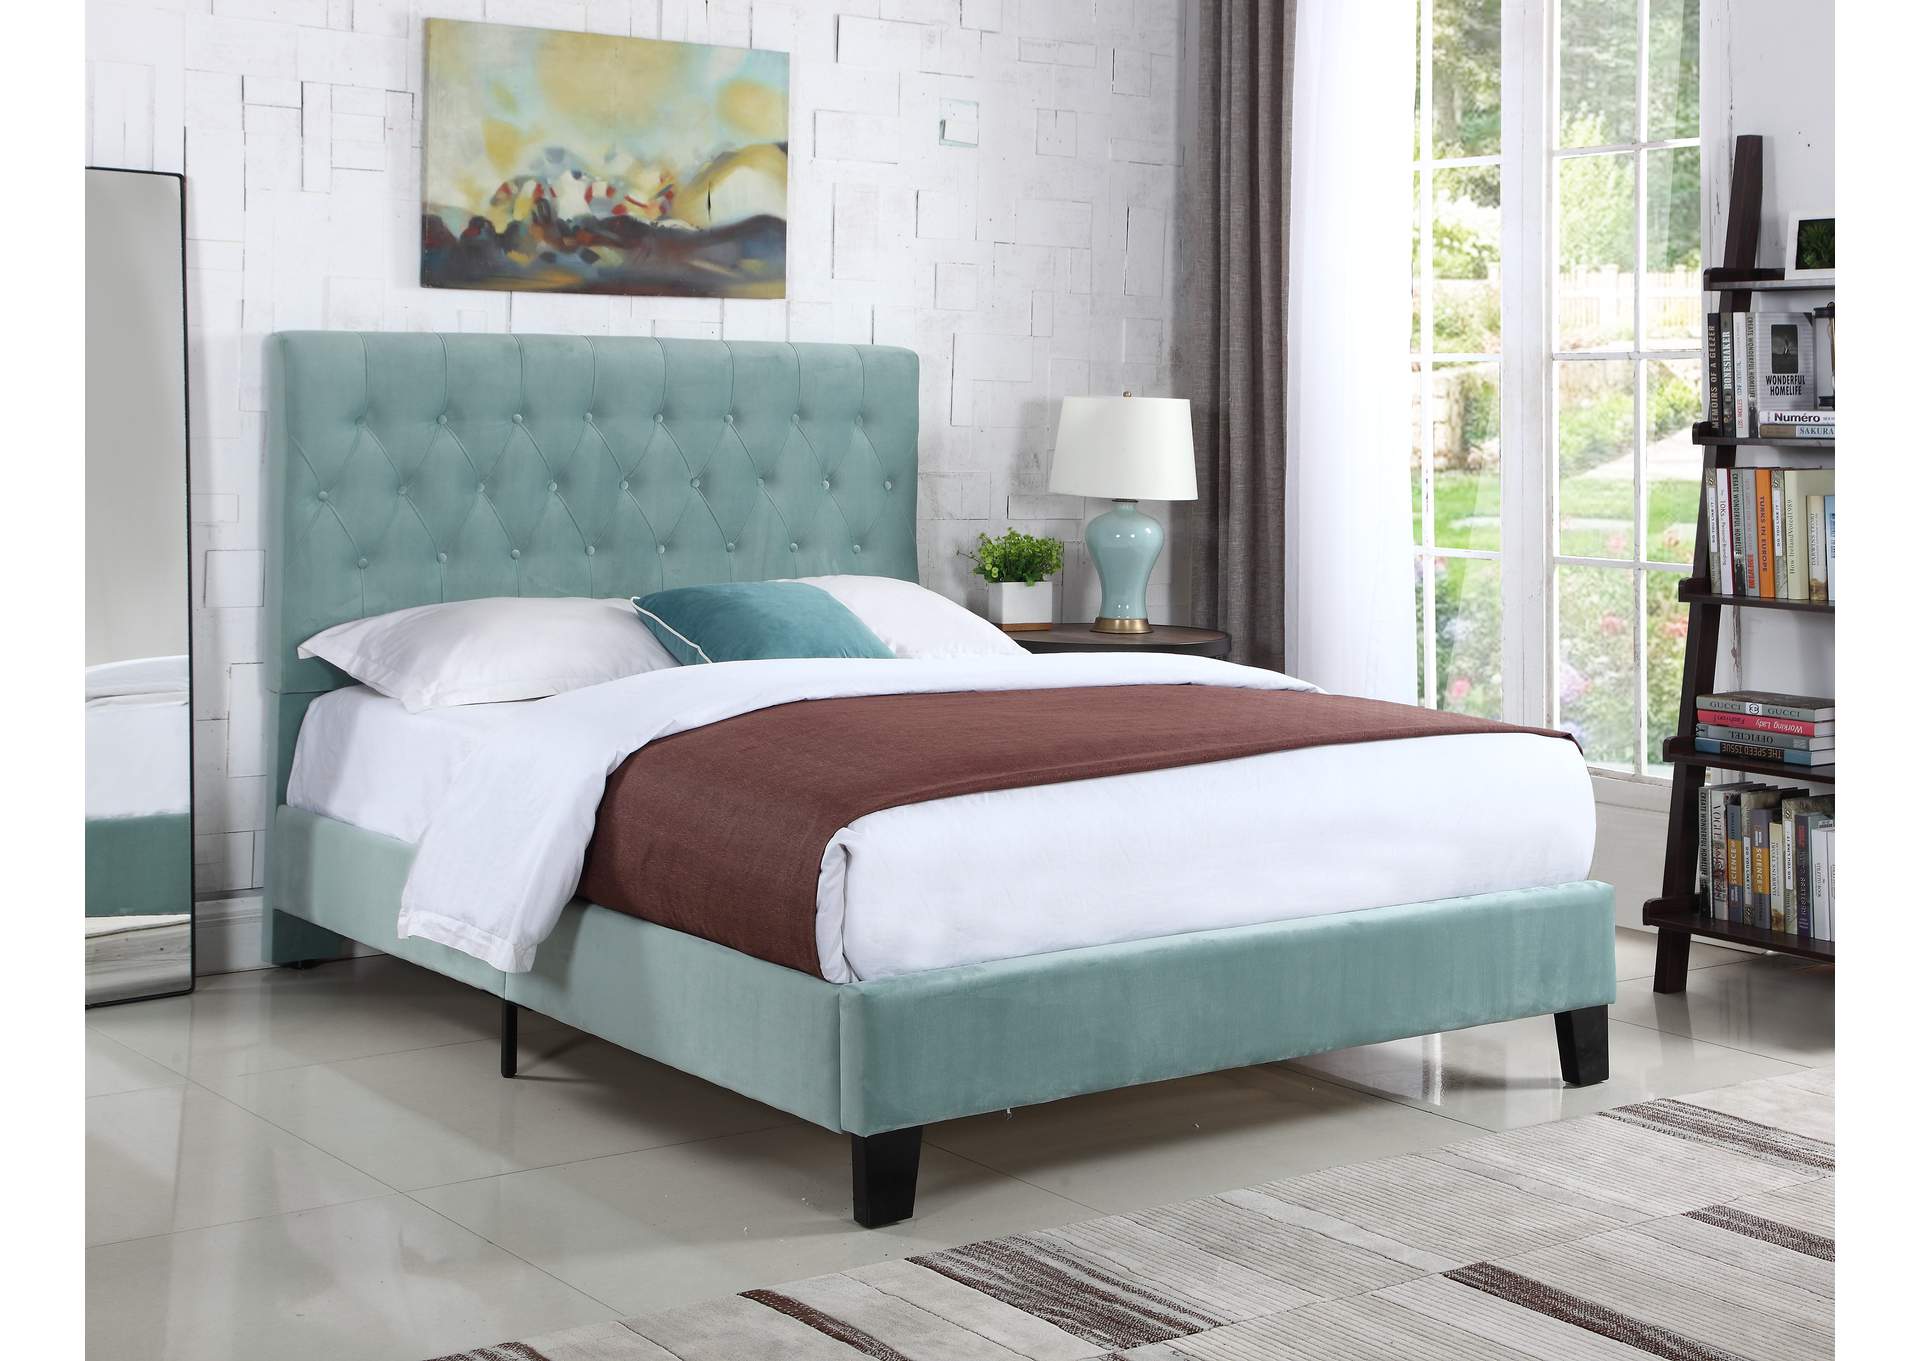 Amelia King Upholstered Bed,Emerald Home Furnishings